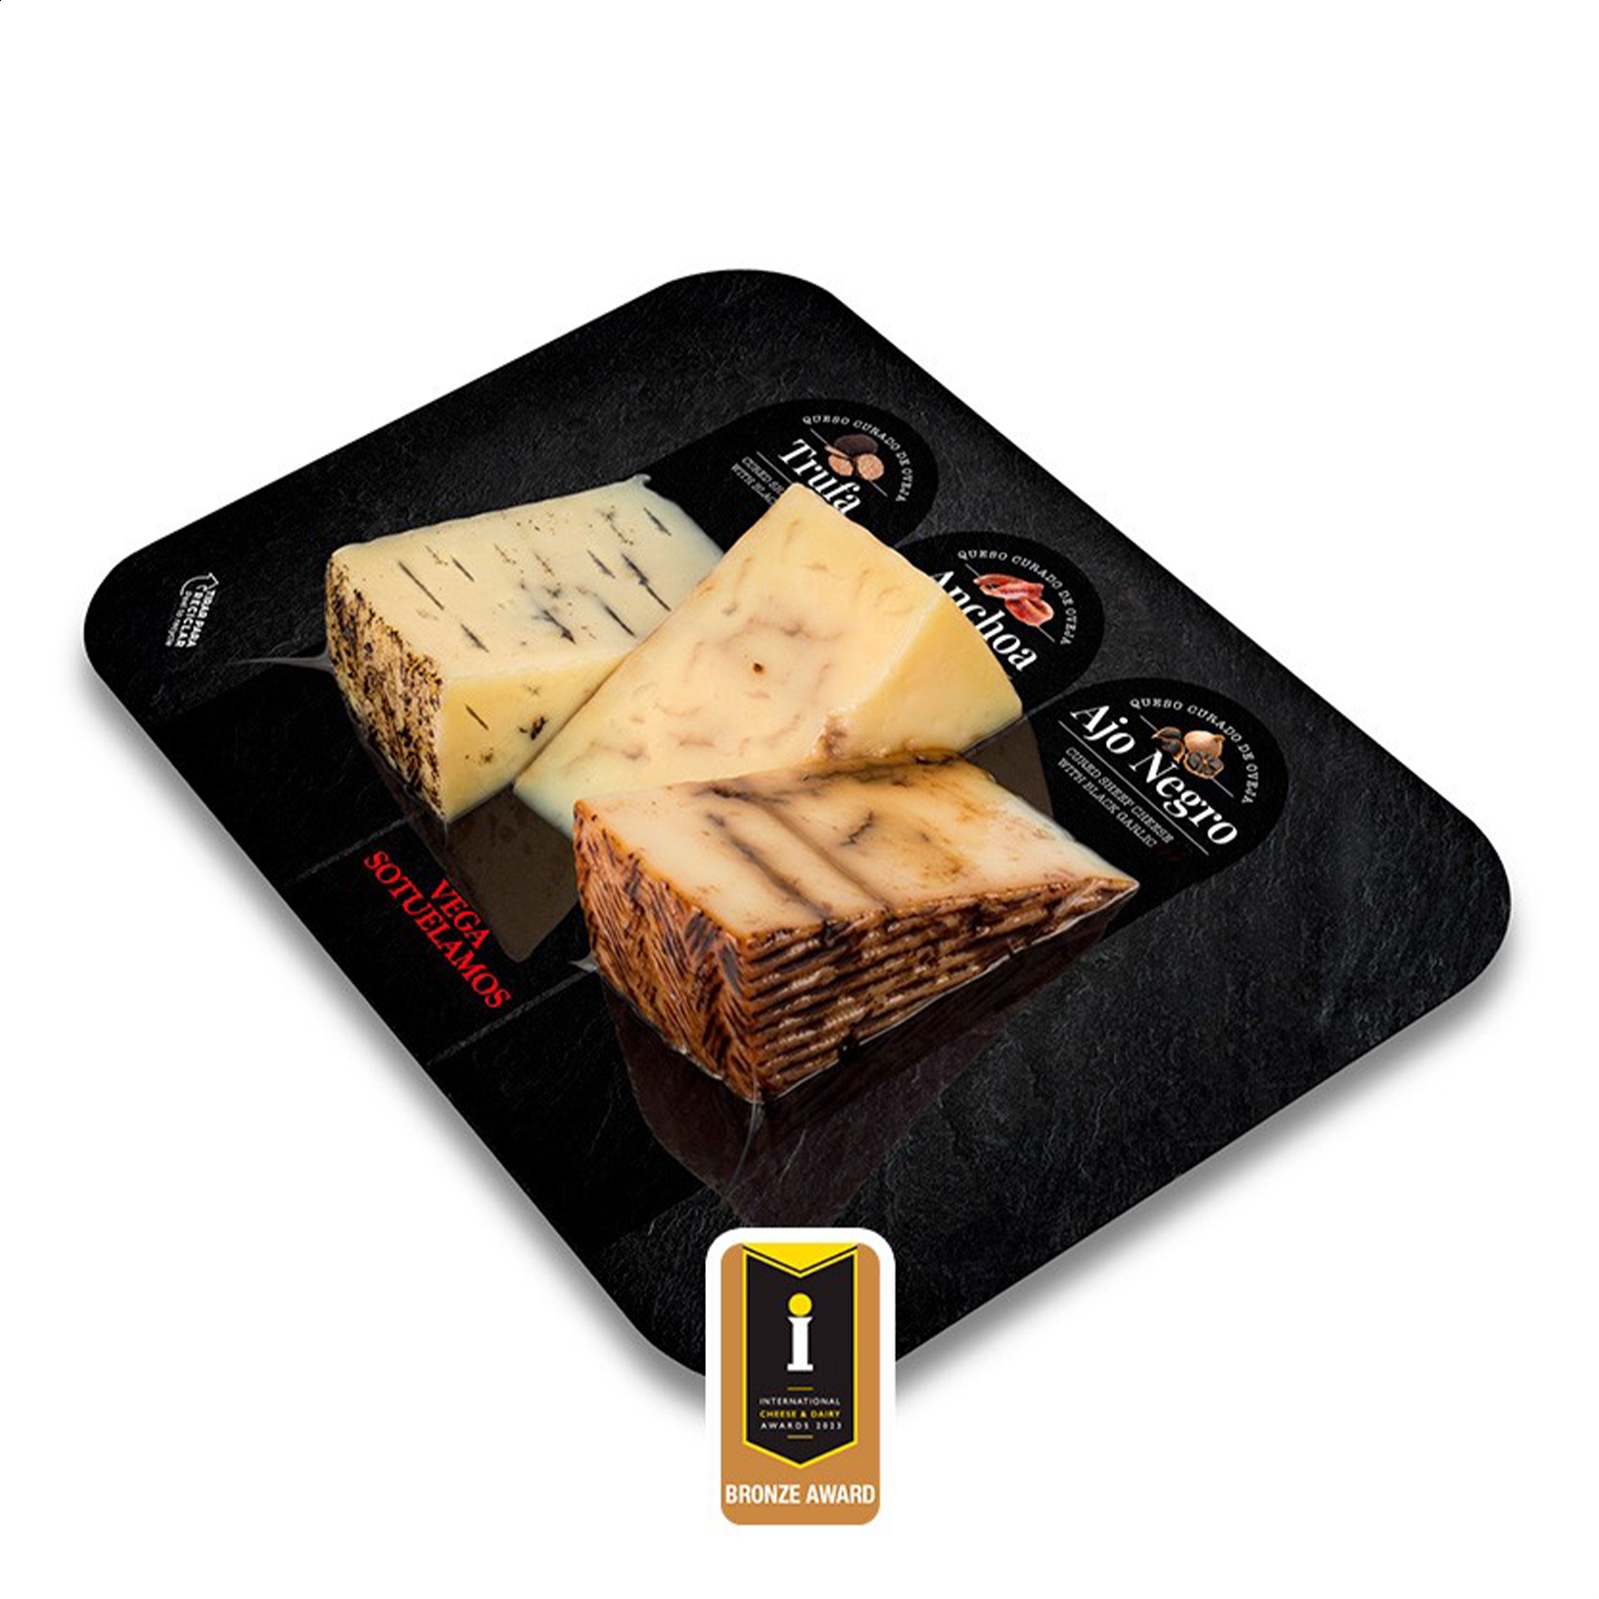 Vega Sotuélamos - Tabla de queso de oveja precortados variados de leche pasteurizada 100g aprox, 3uds